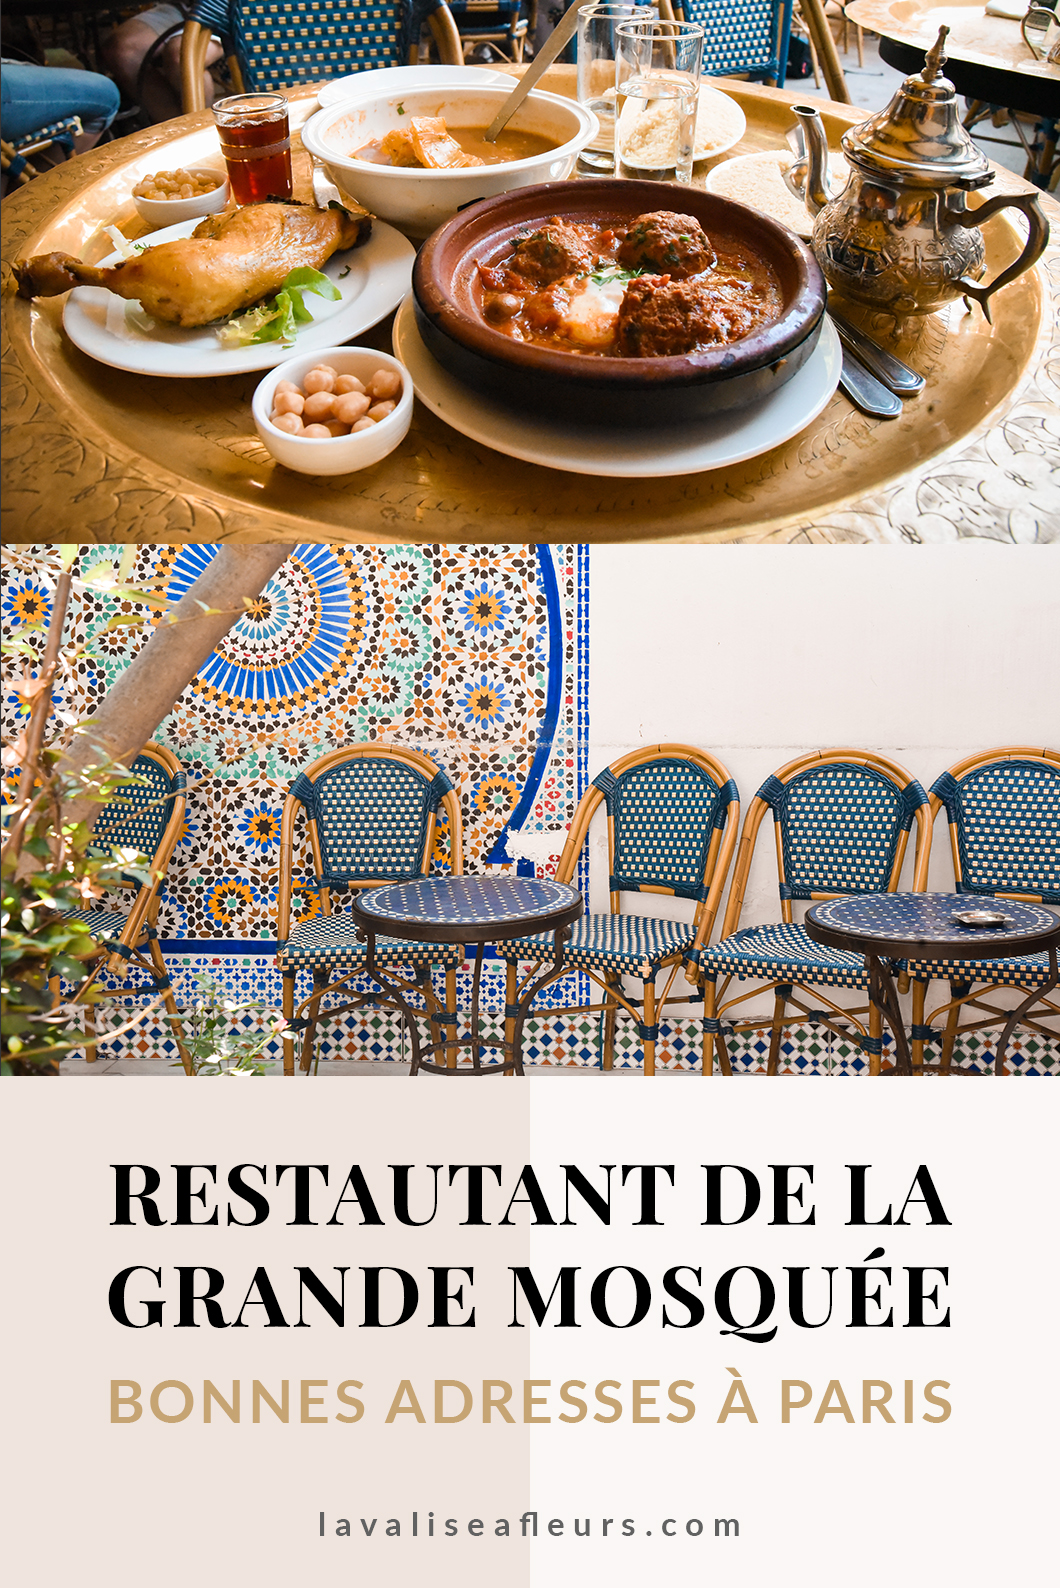 Restaurant de la Grande Mosquée nos bonnes adresses à Paris